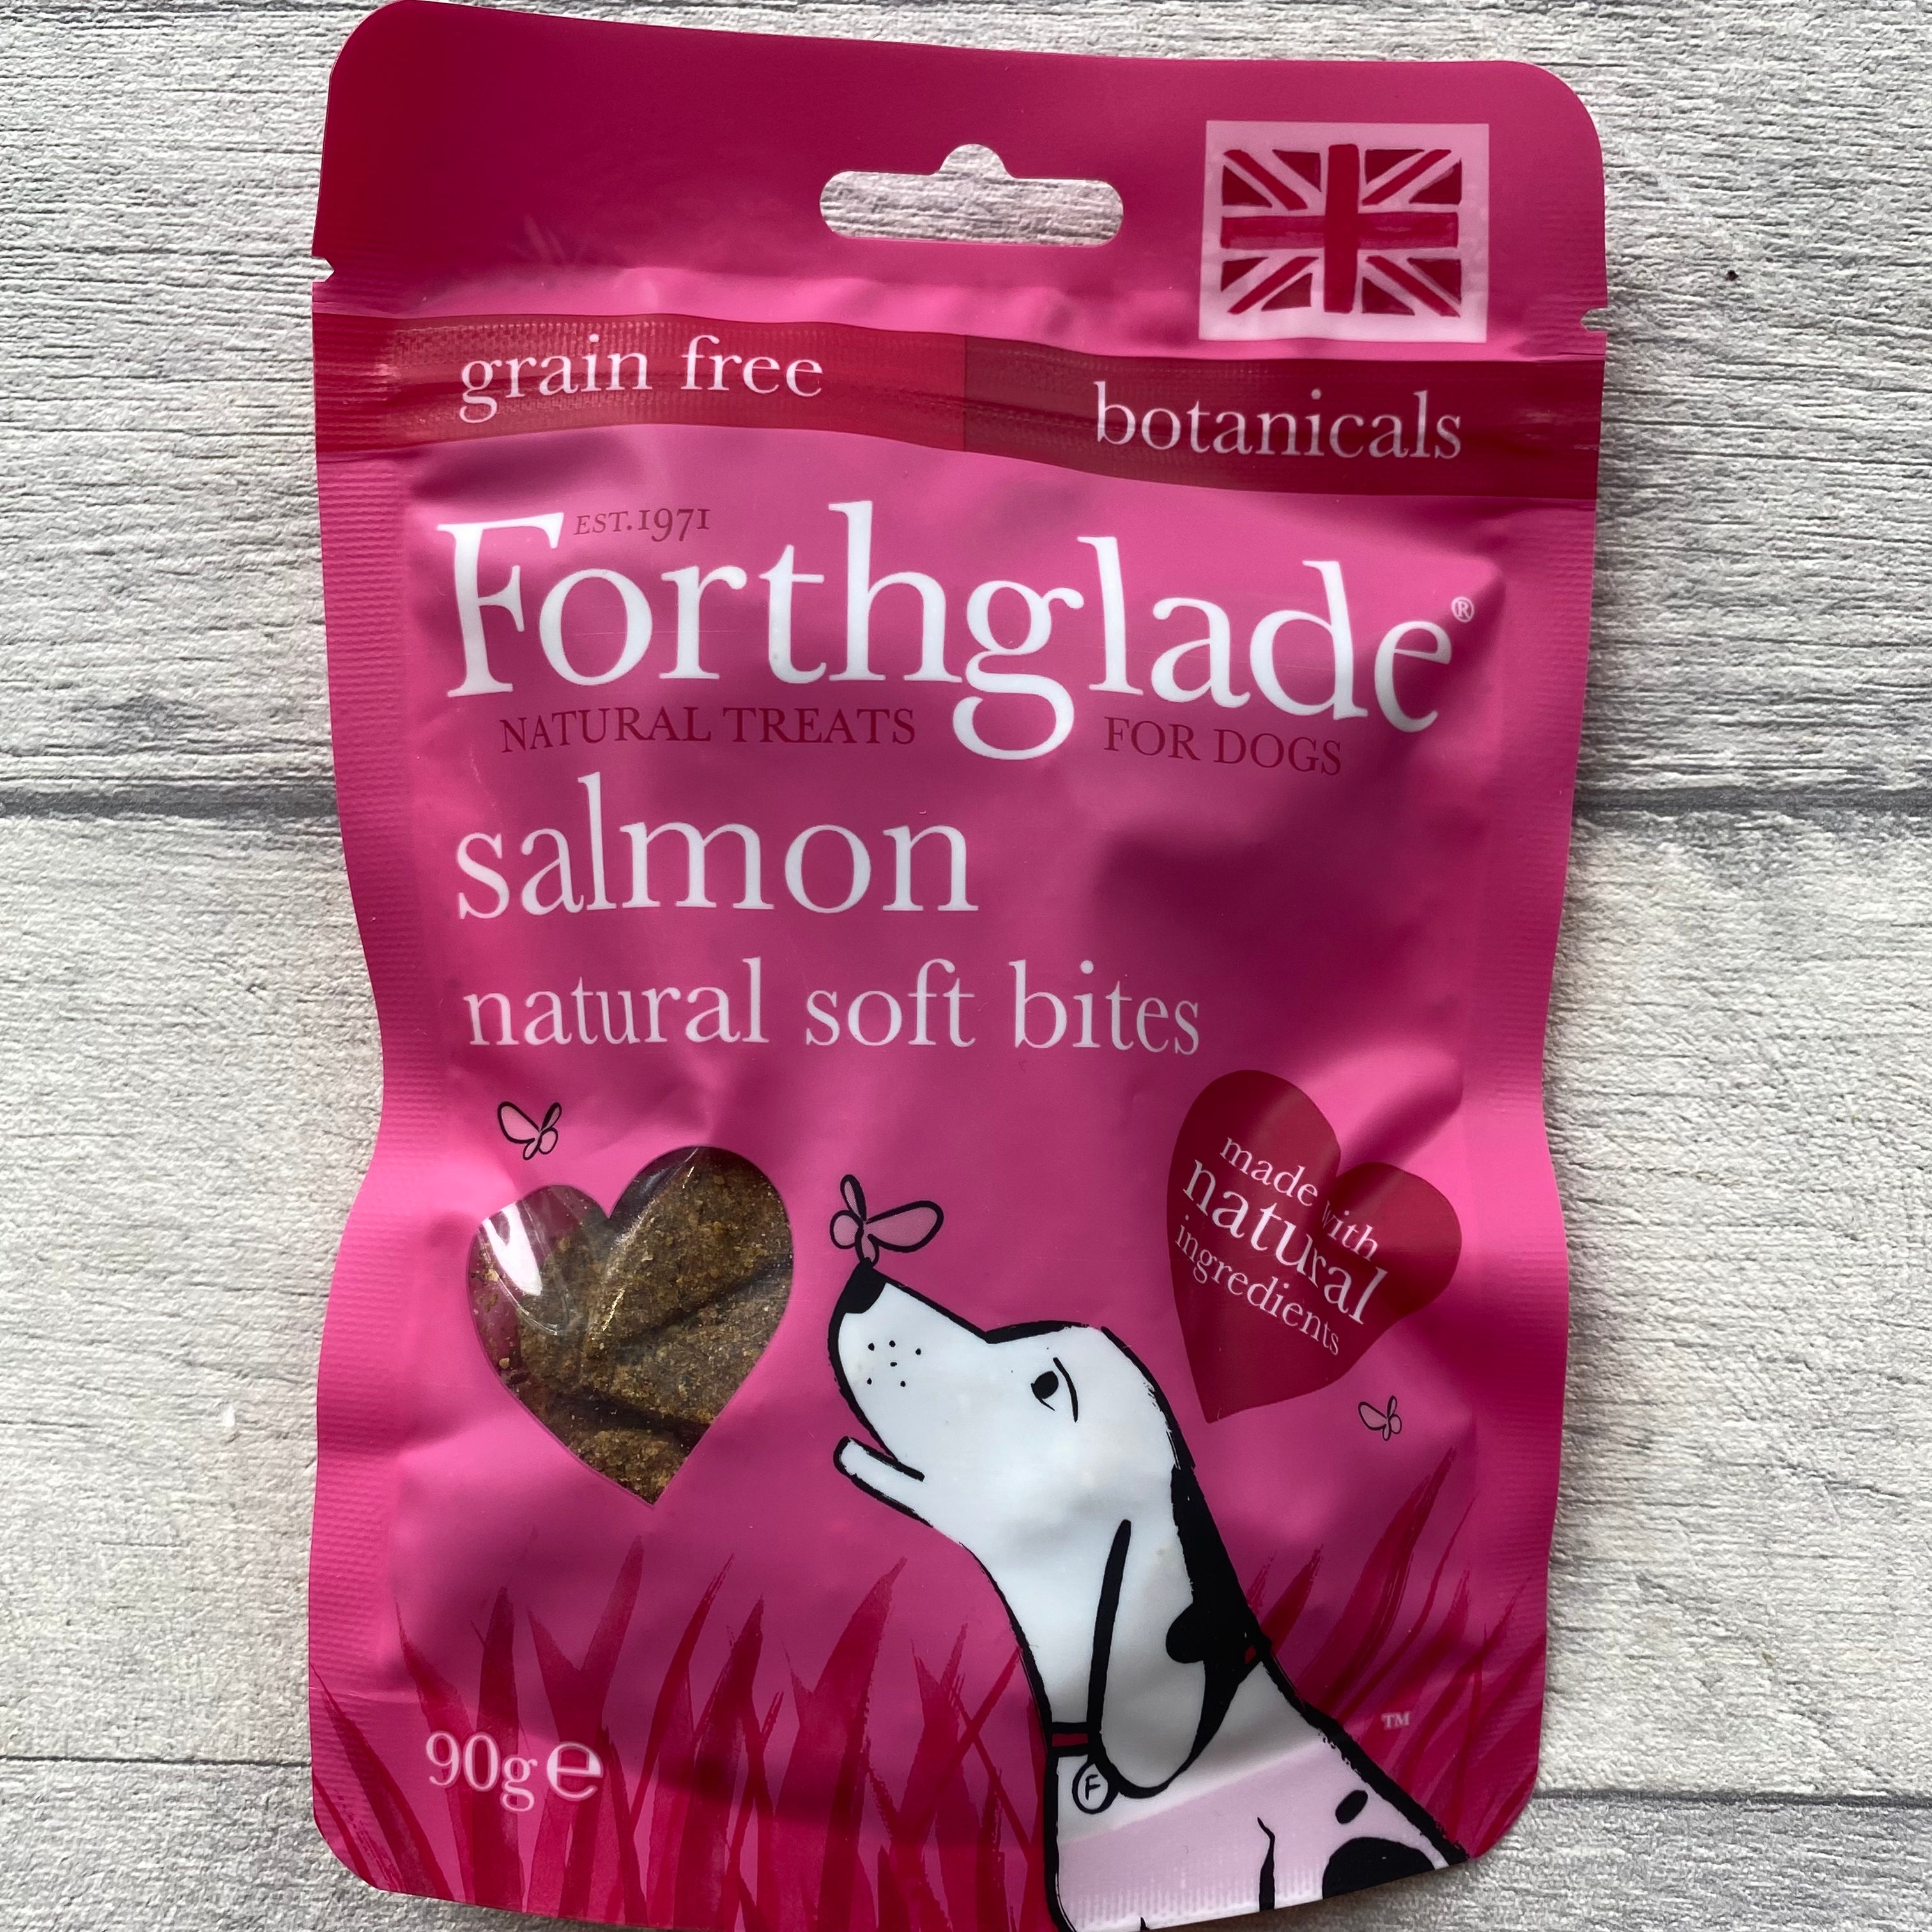 Forthglade Salmon Natural Soft Bite Treats